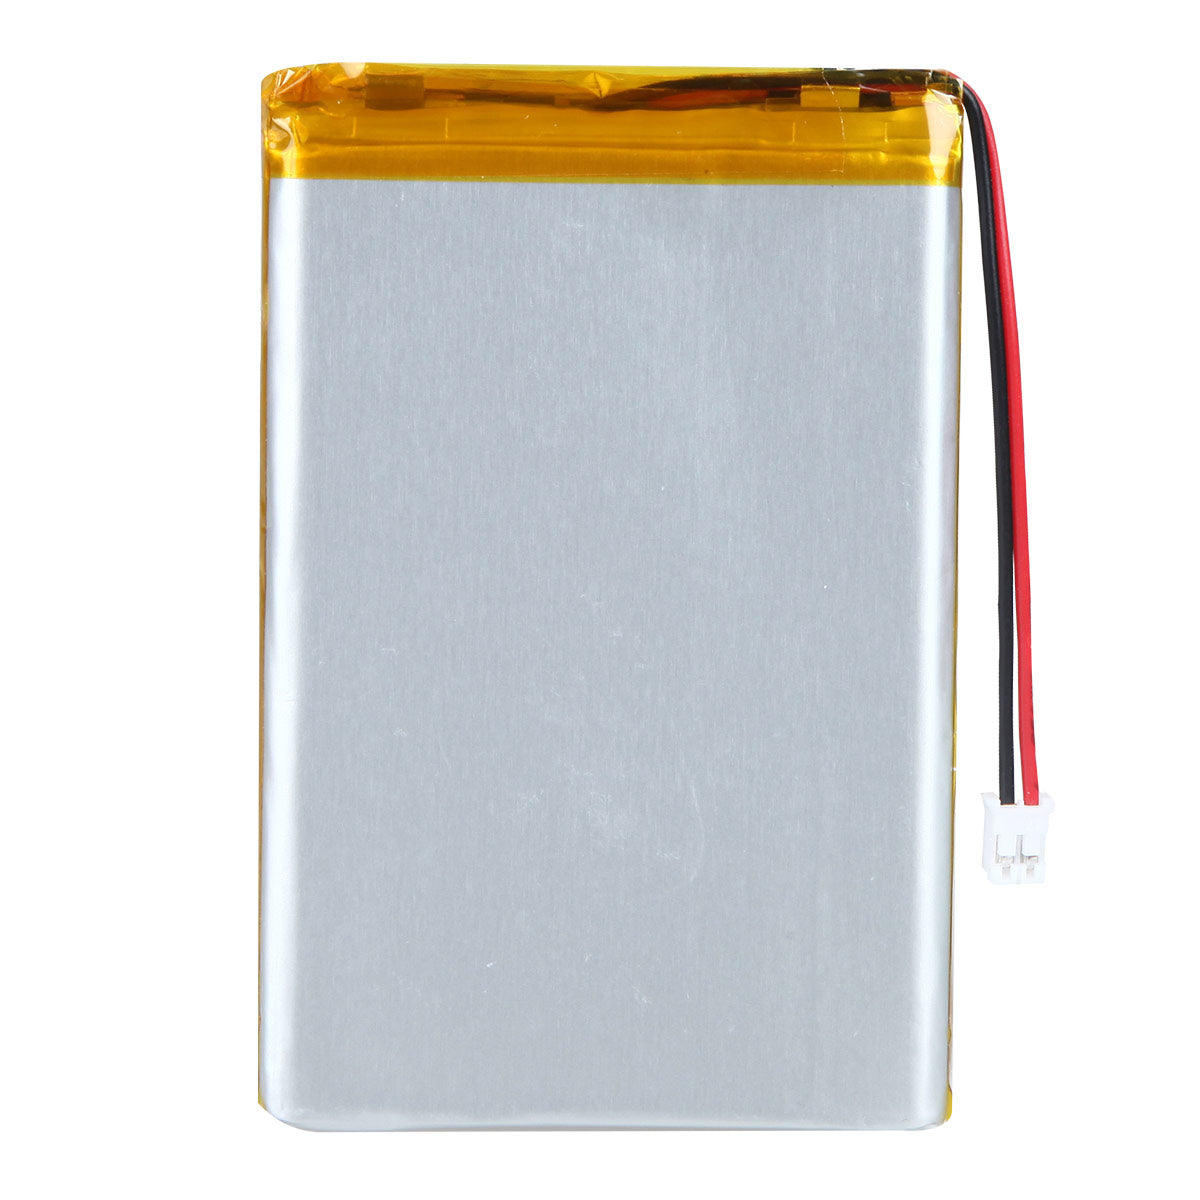 YDL 3.7V 5000mAh 706090 Batterie Lithium Polymère Rechargeable Longueur 92mm